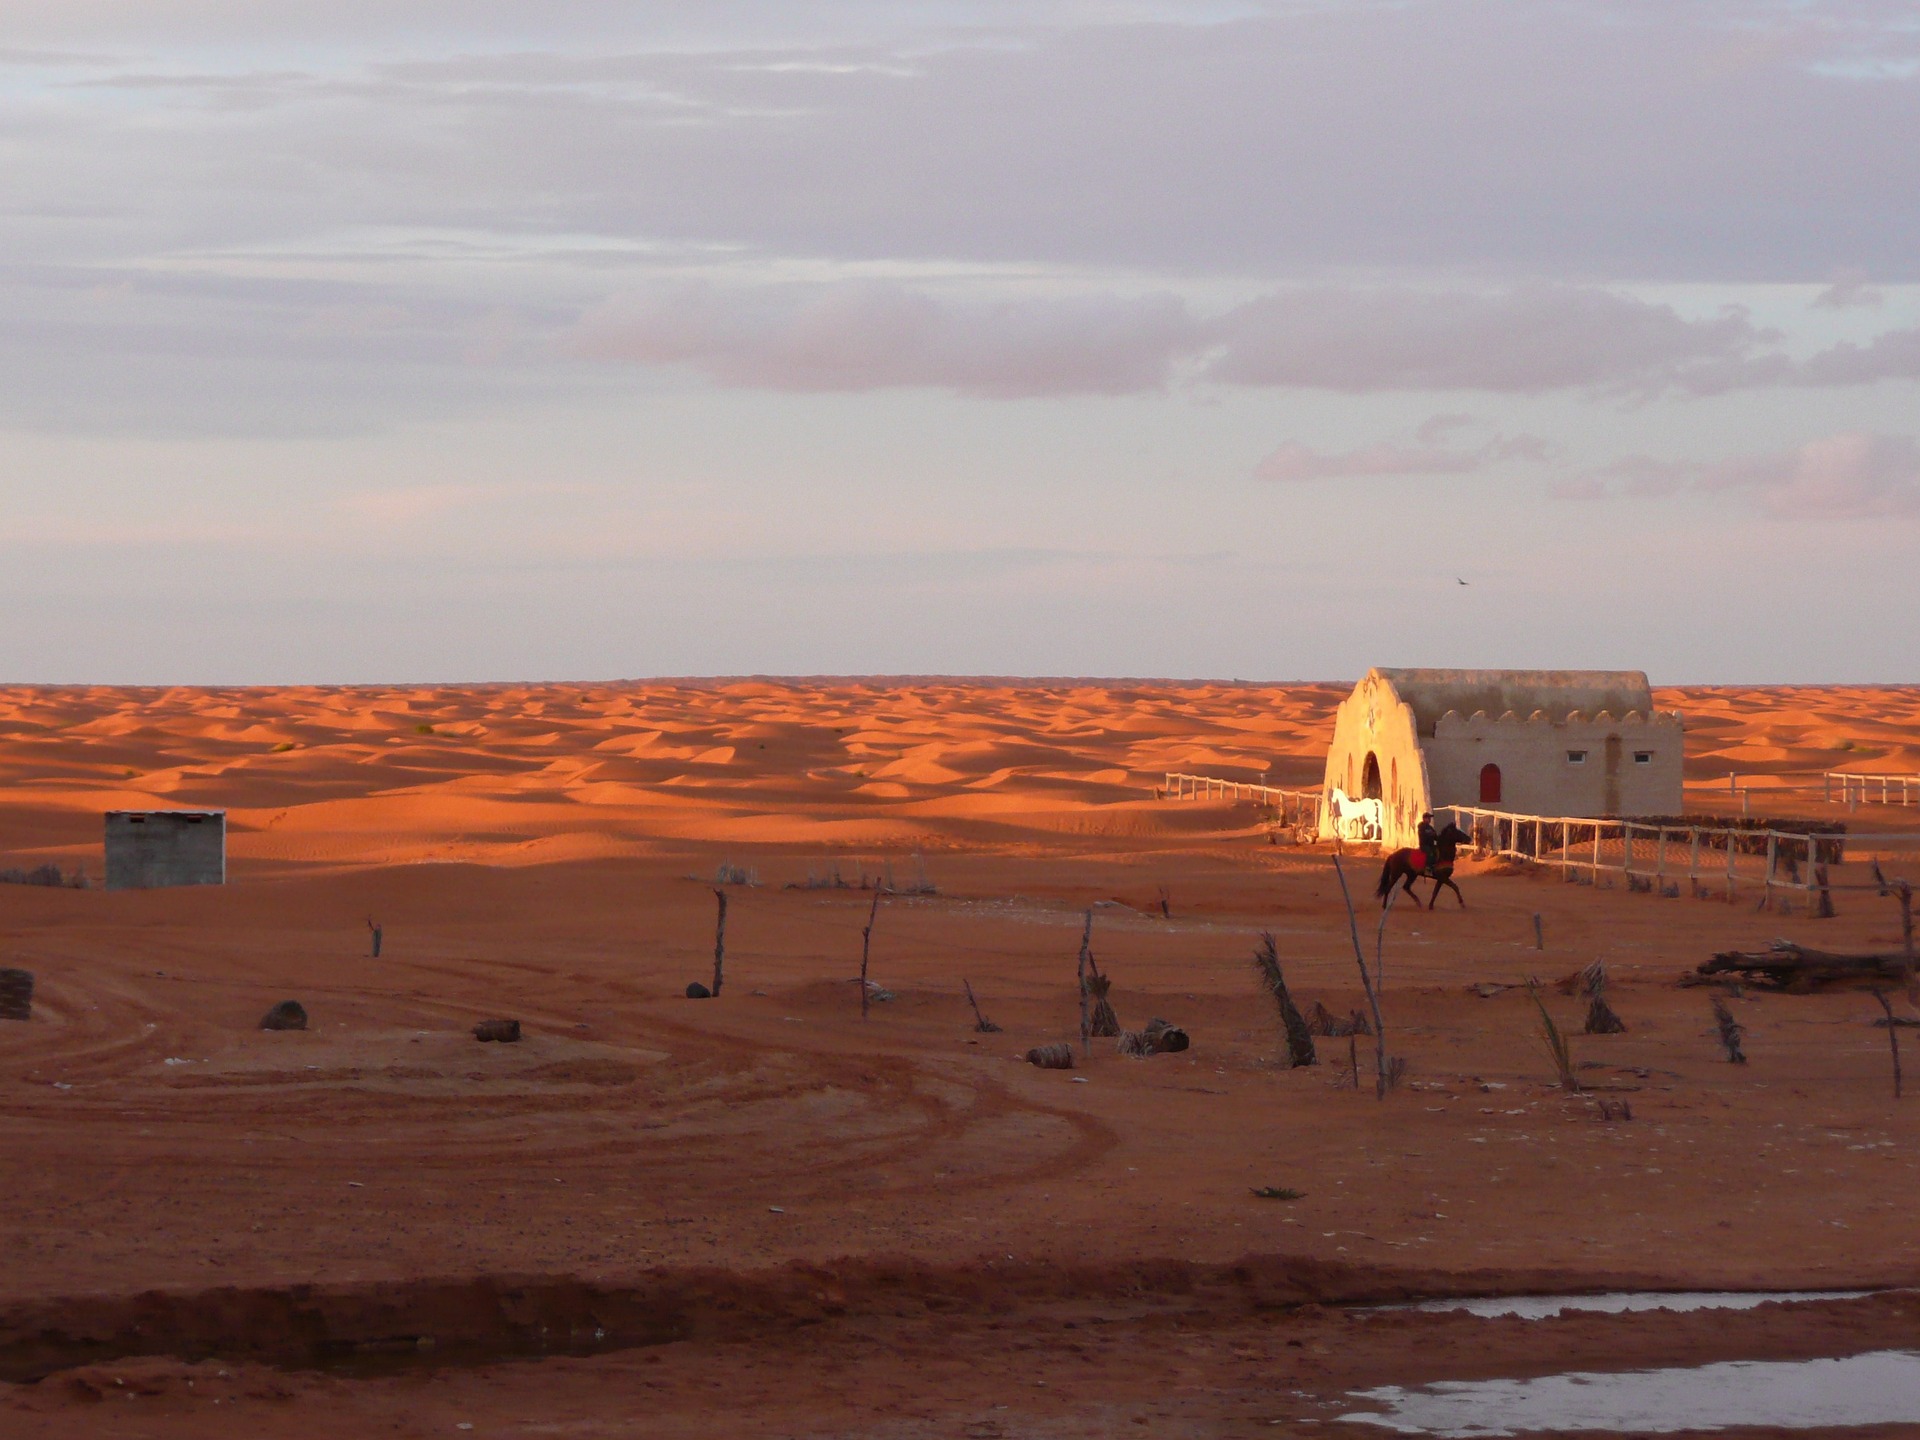 Camping In The Sahara Desert - An Adventure Of A Lifetime